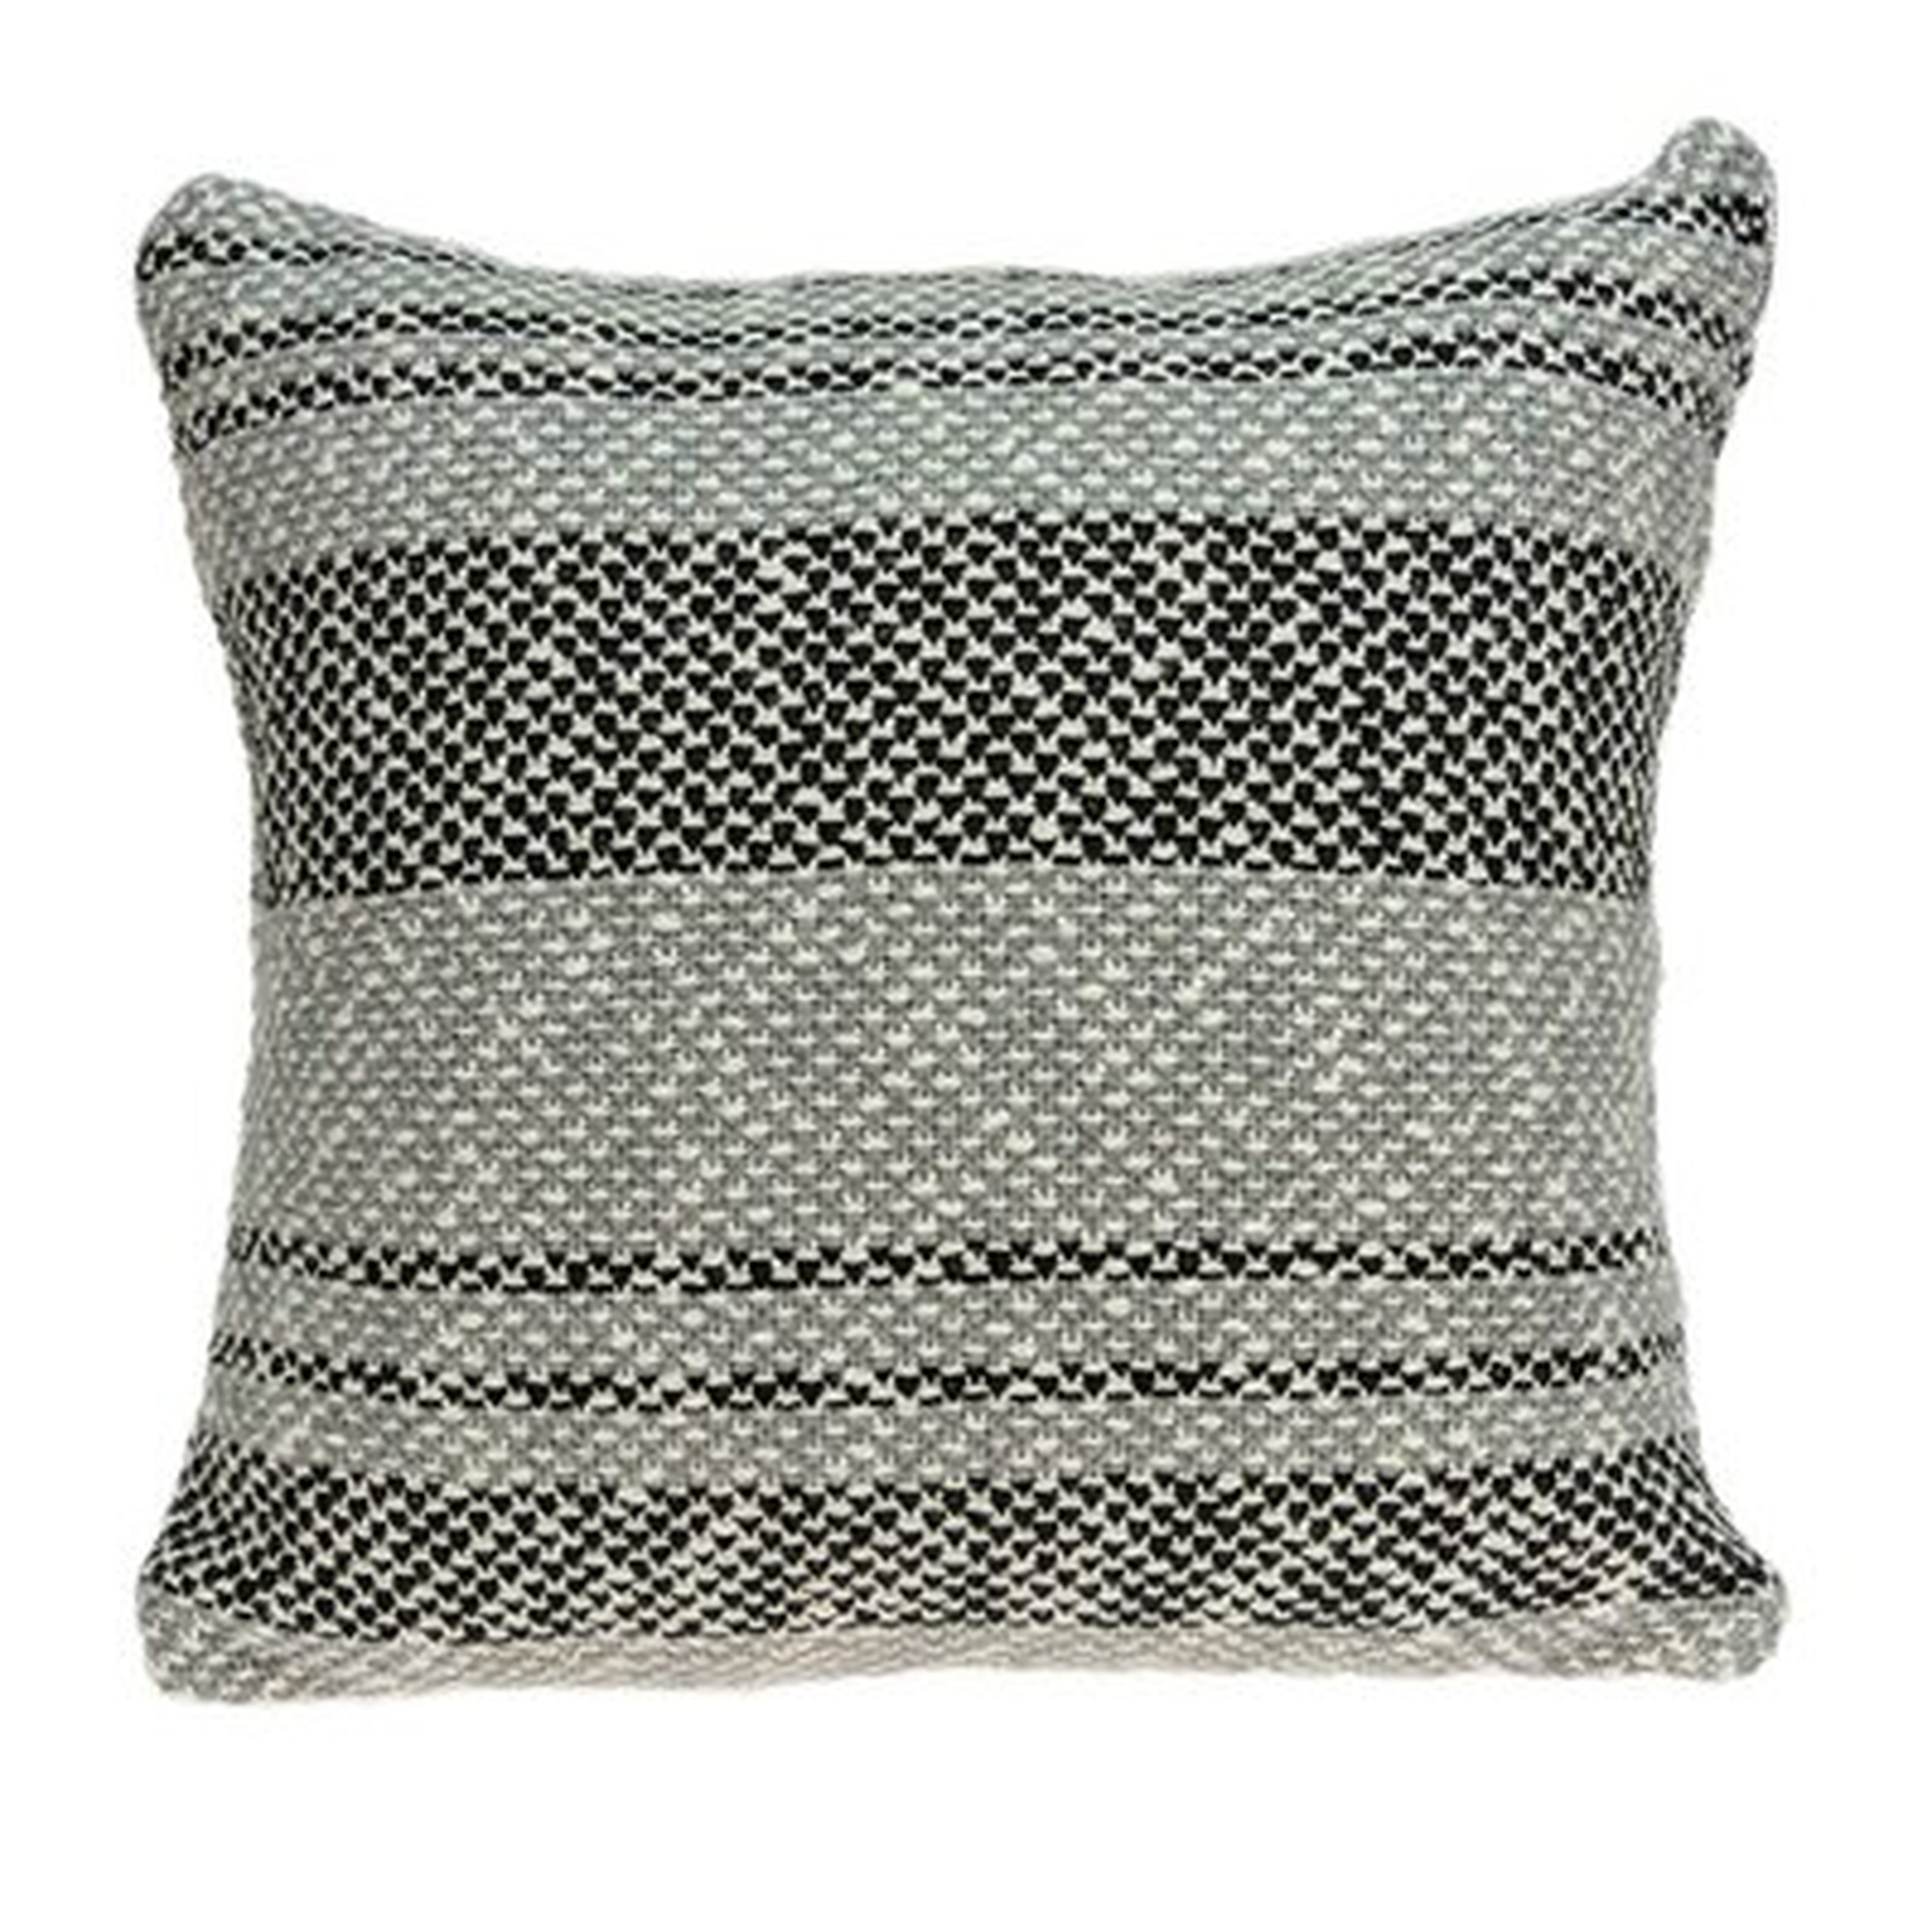 20" X 0.5" X 20" Charming Transitional Gray Pillow Cover - Wayfair